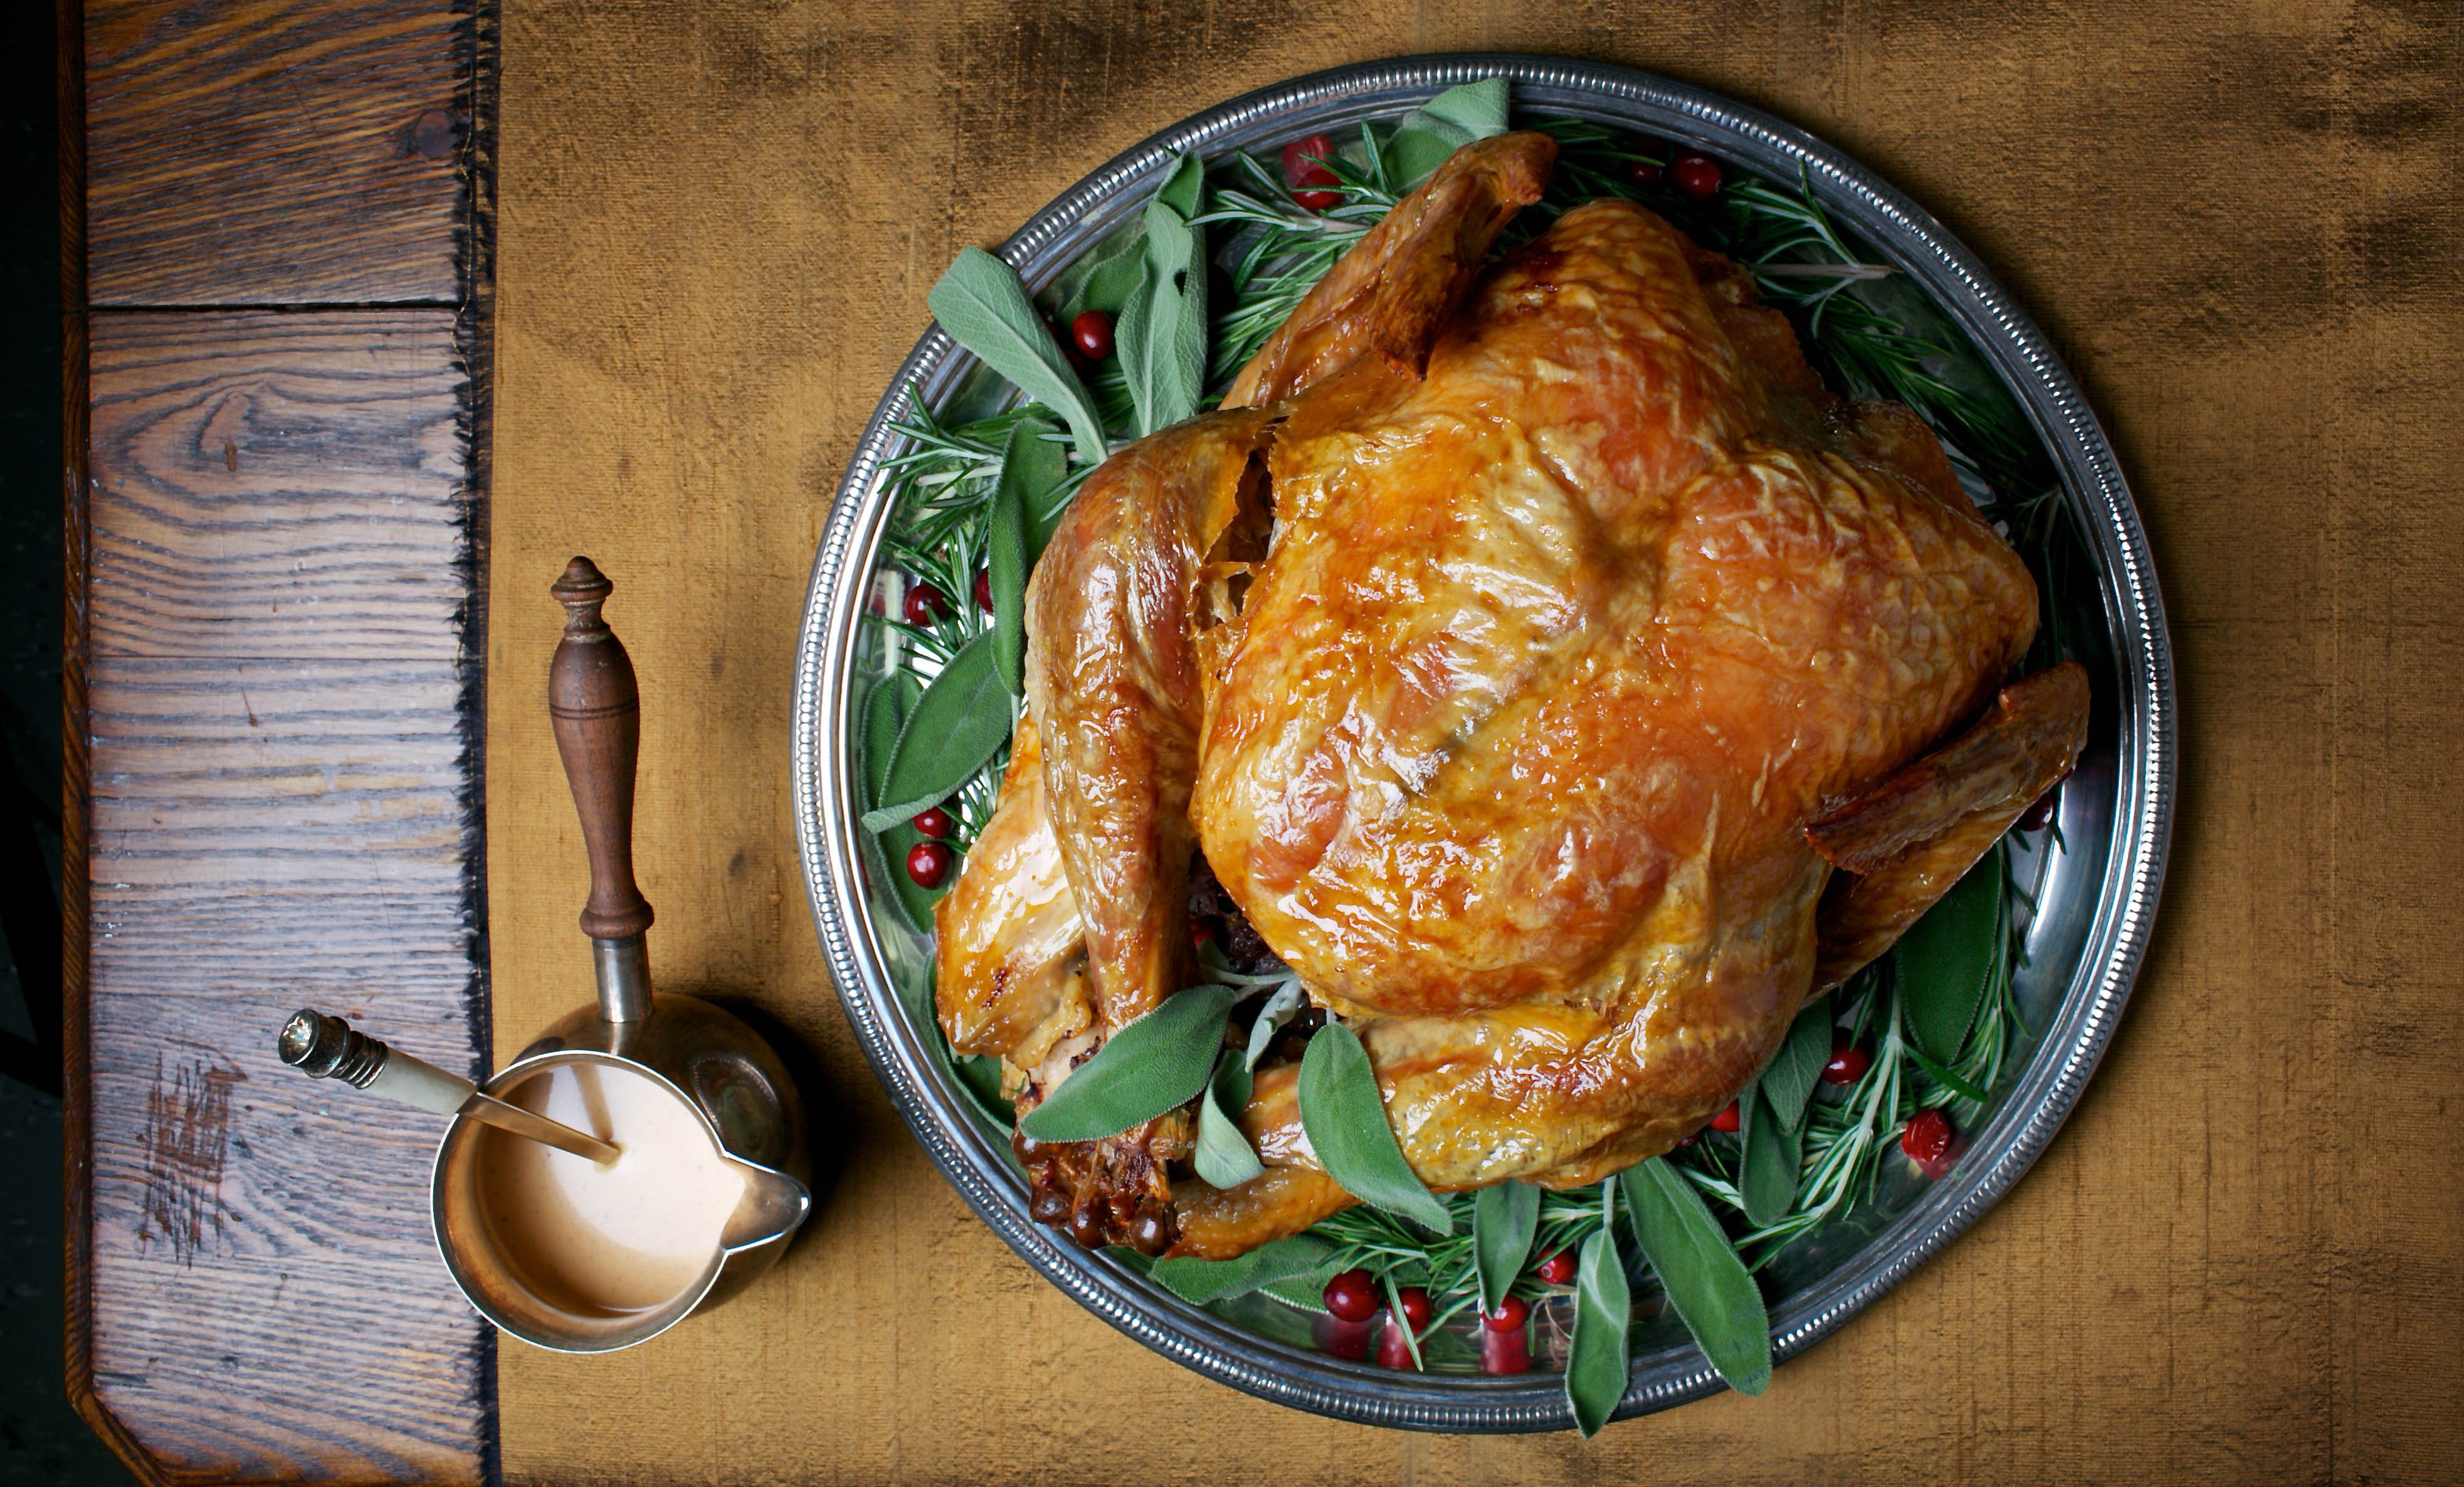 Gordon Ramsay - Christmas Turkey With Gravy
 How to cook Christmas dinner according to Gordon Ramsay